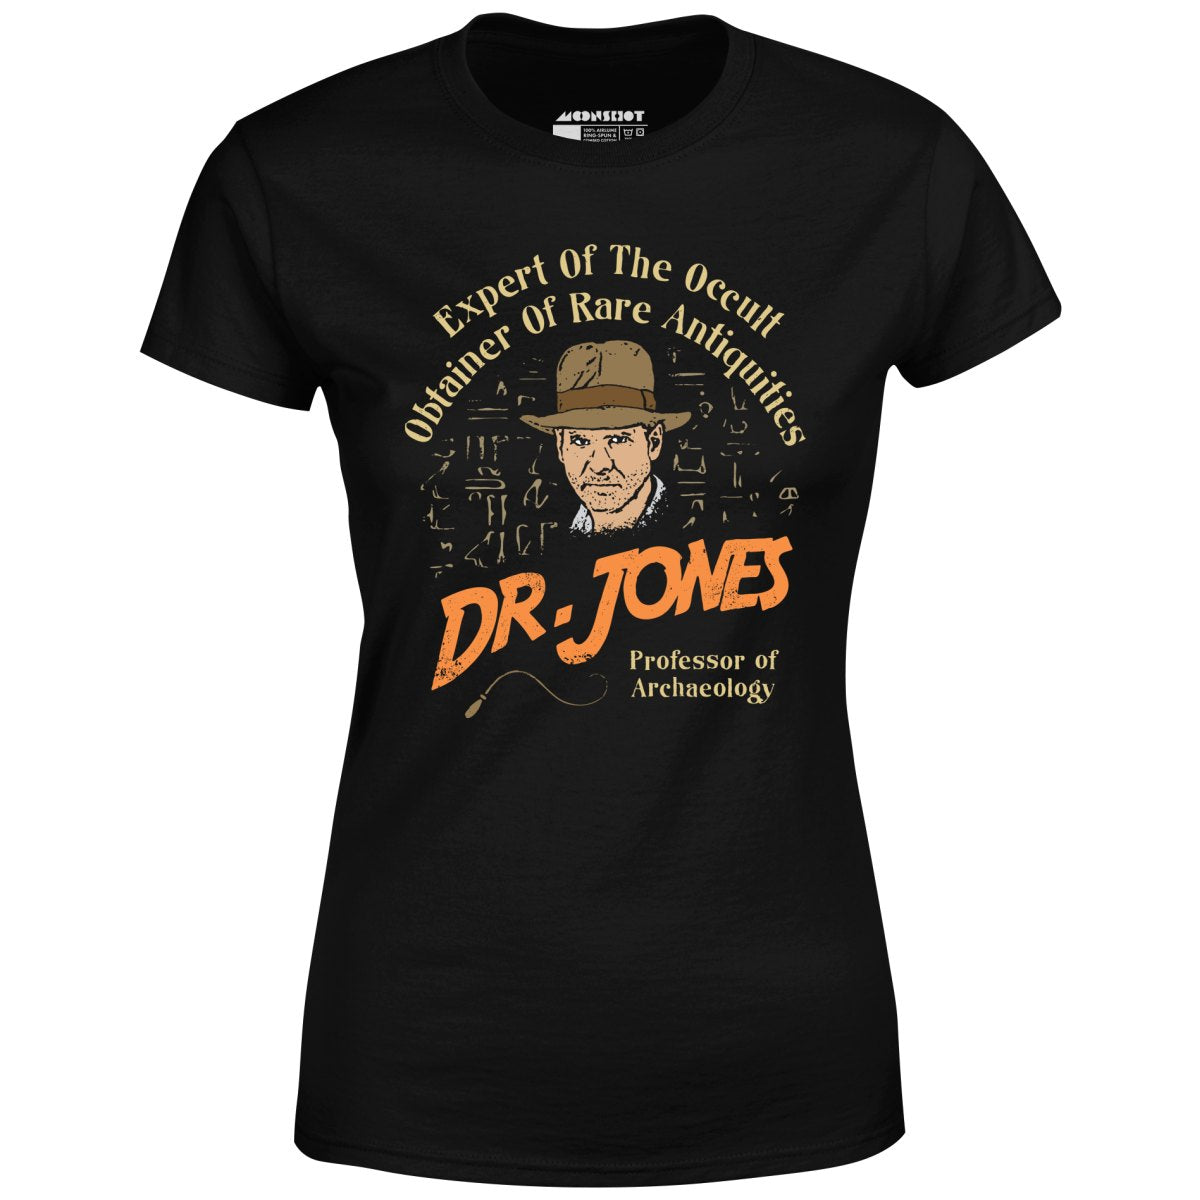 Dr. Jones Professor of Archaeology - Women's T-Shirt